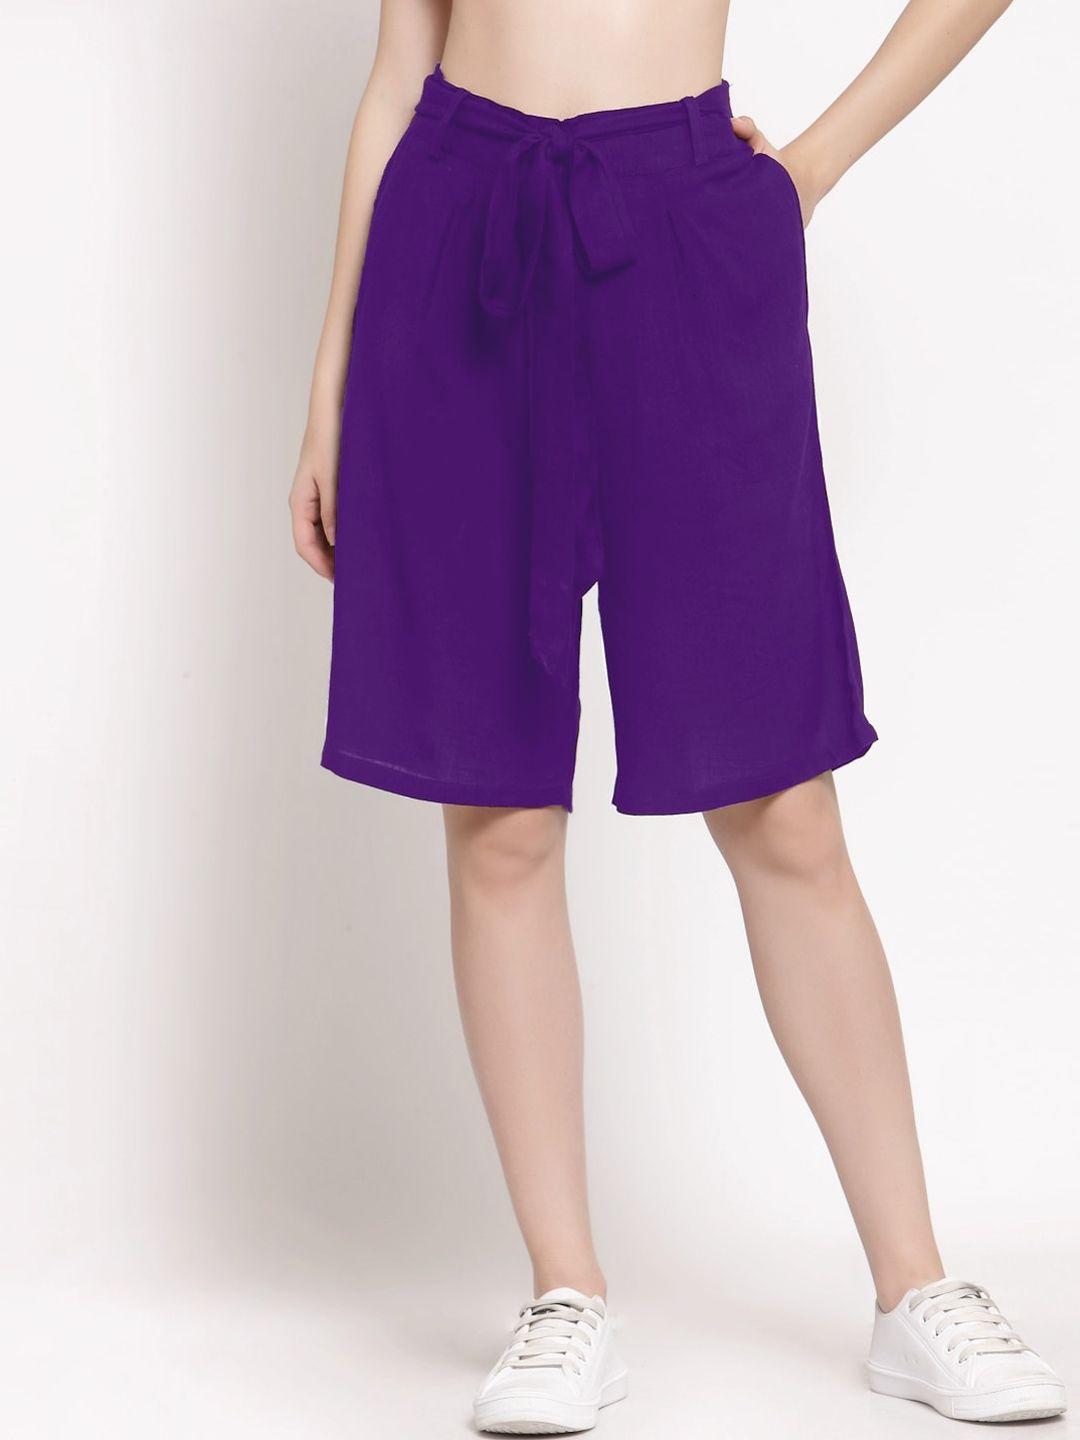 patrorna women violet antimicrobial shorts